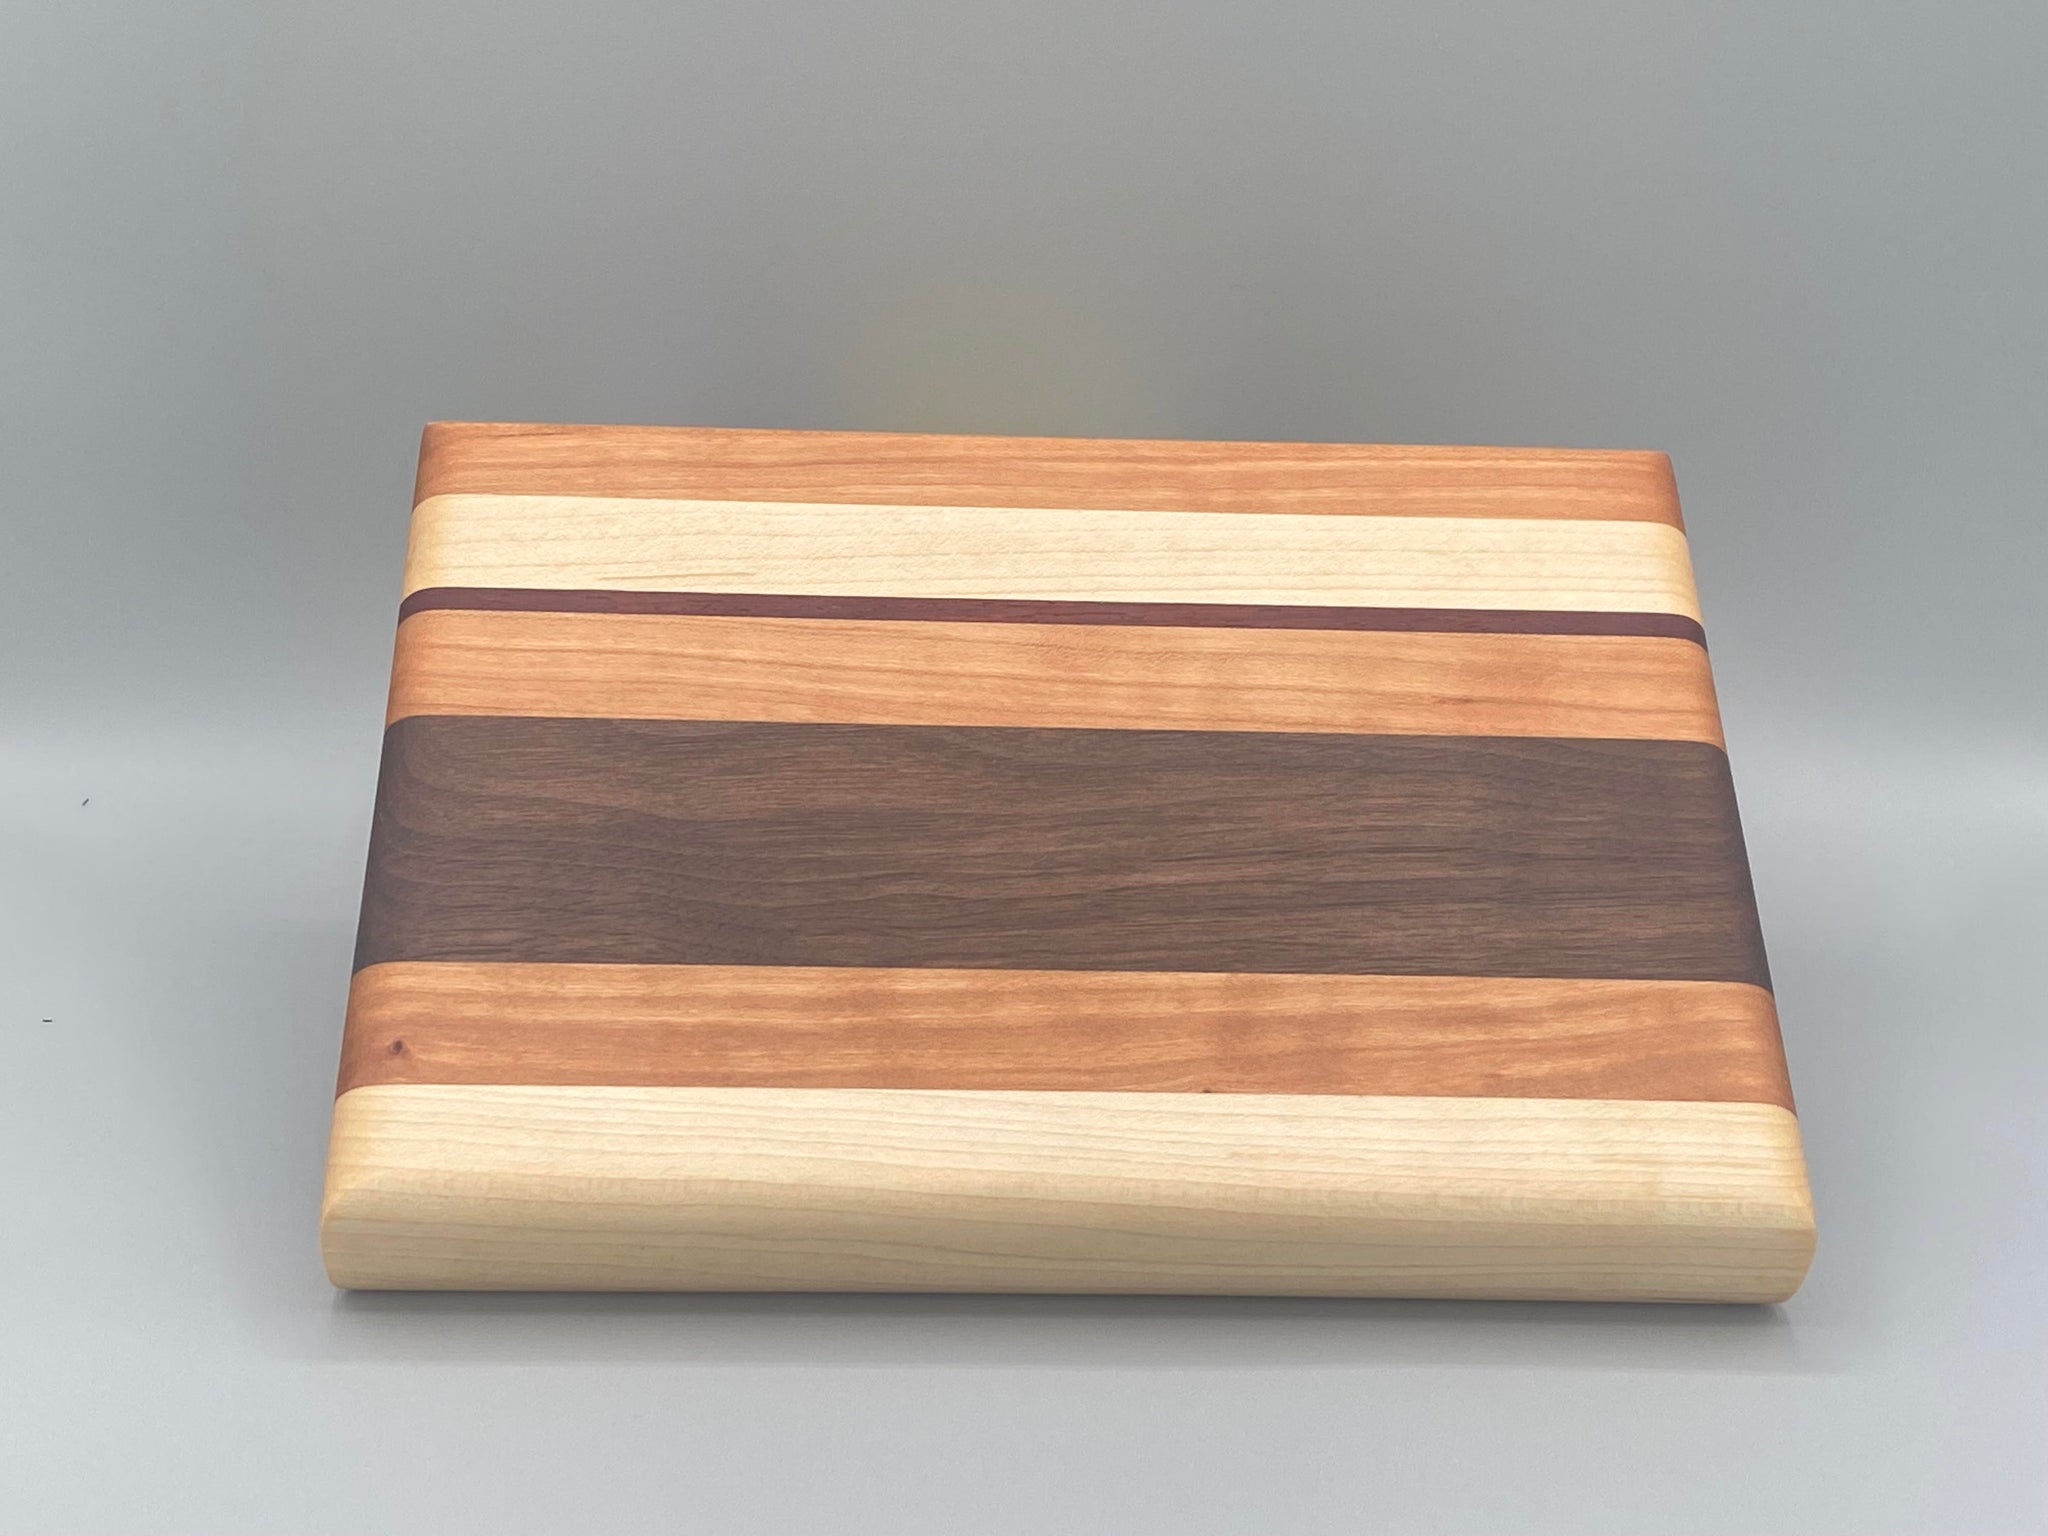 6" X 9" X 1.25" Exotic Hardwood Cutting Board Bar Board